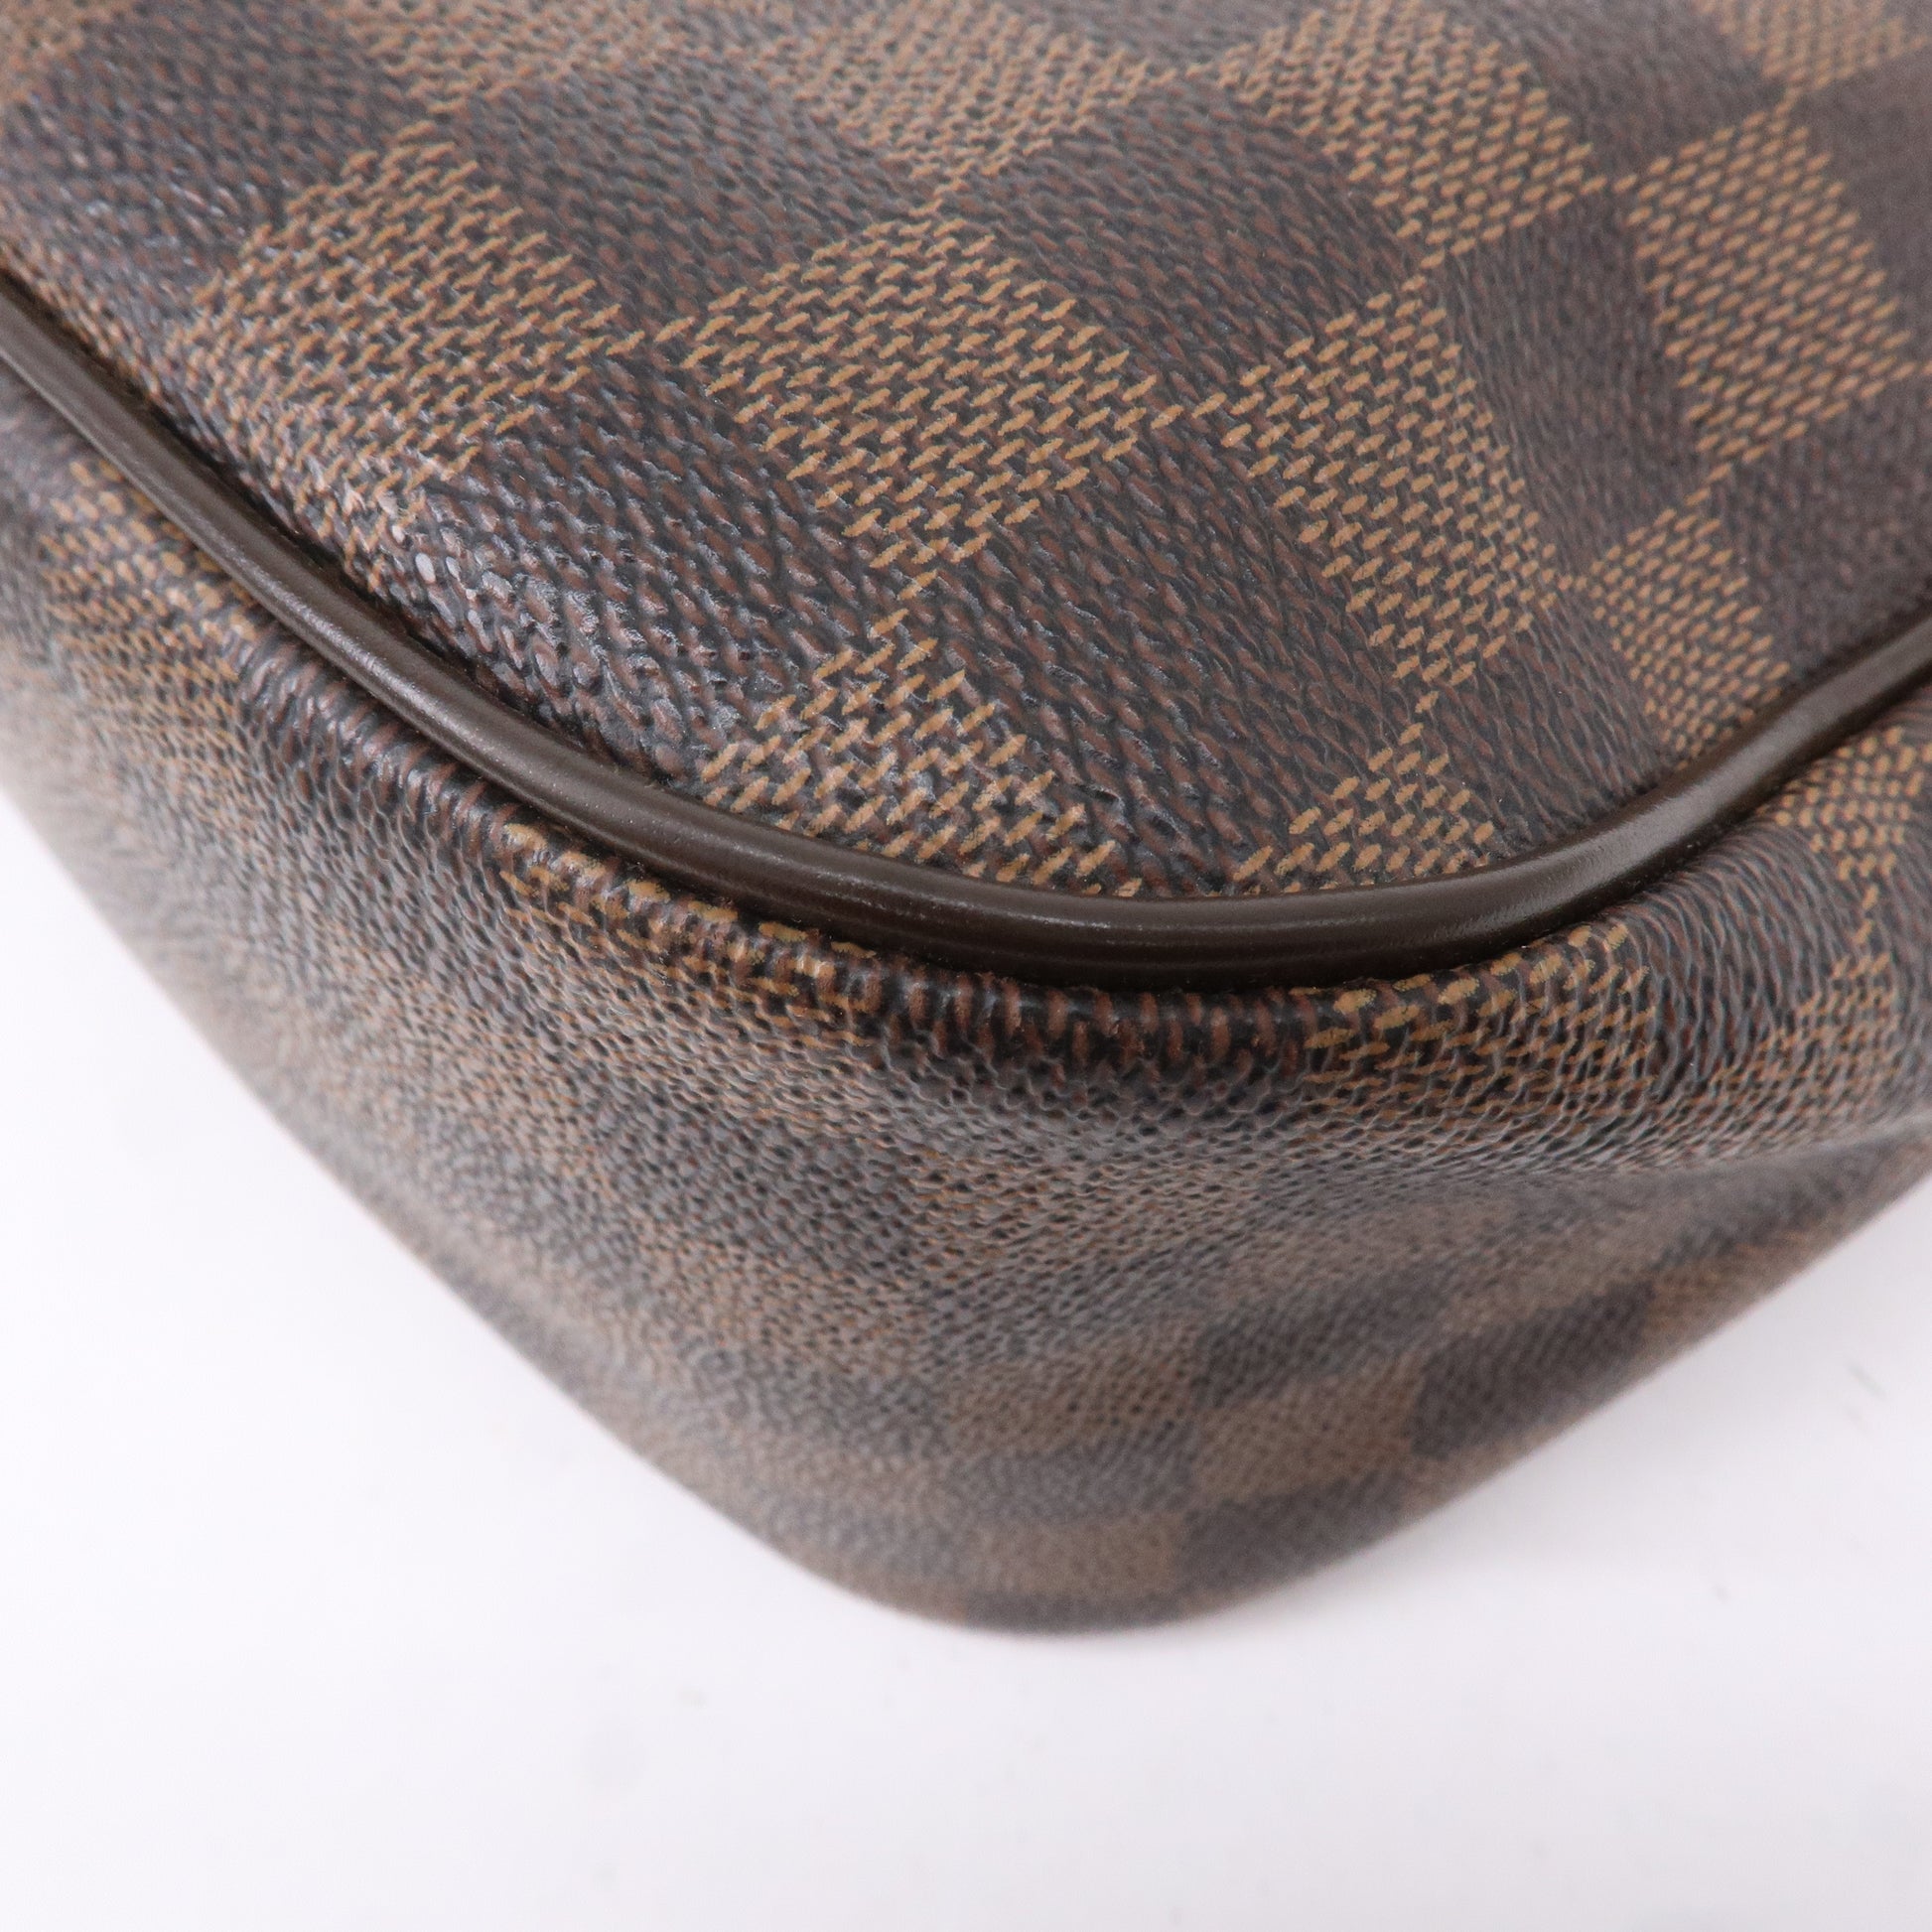 Louis Vuitton Besace Rosebery Handbag